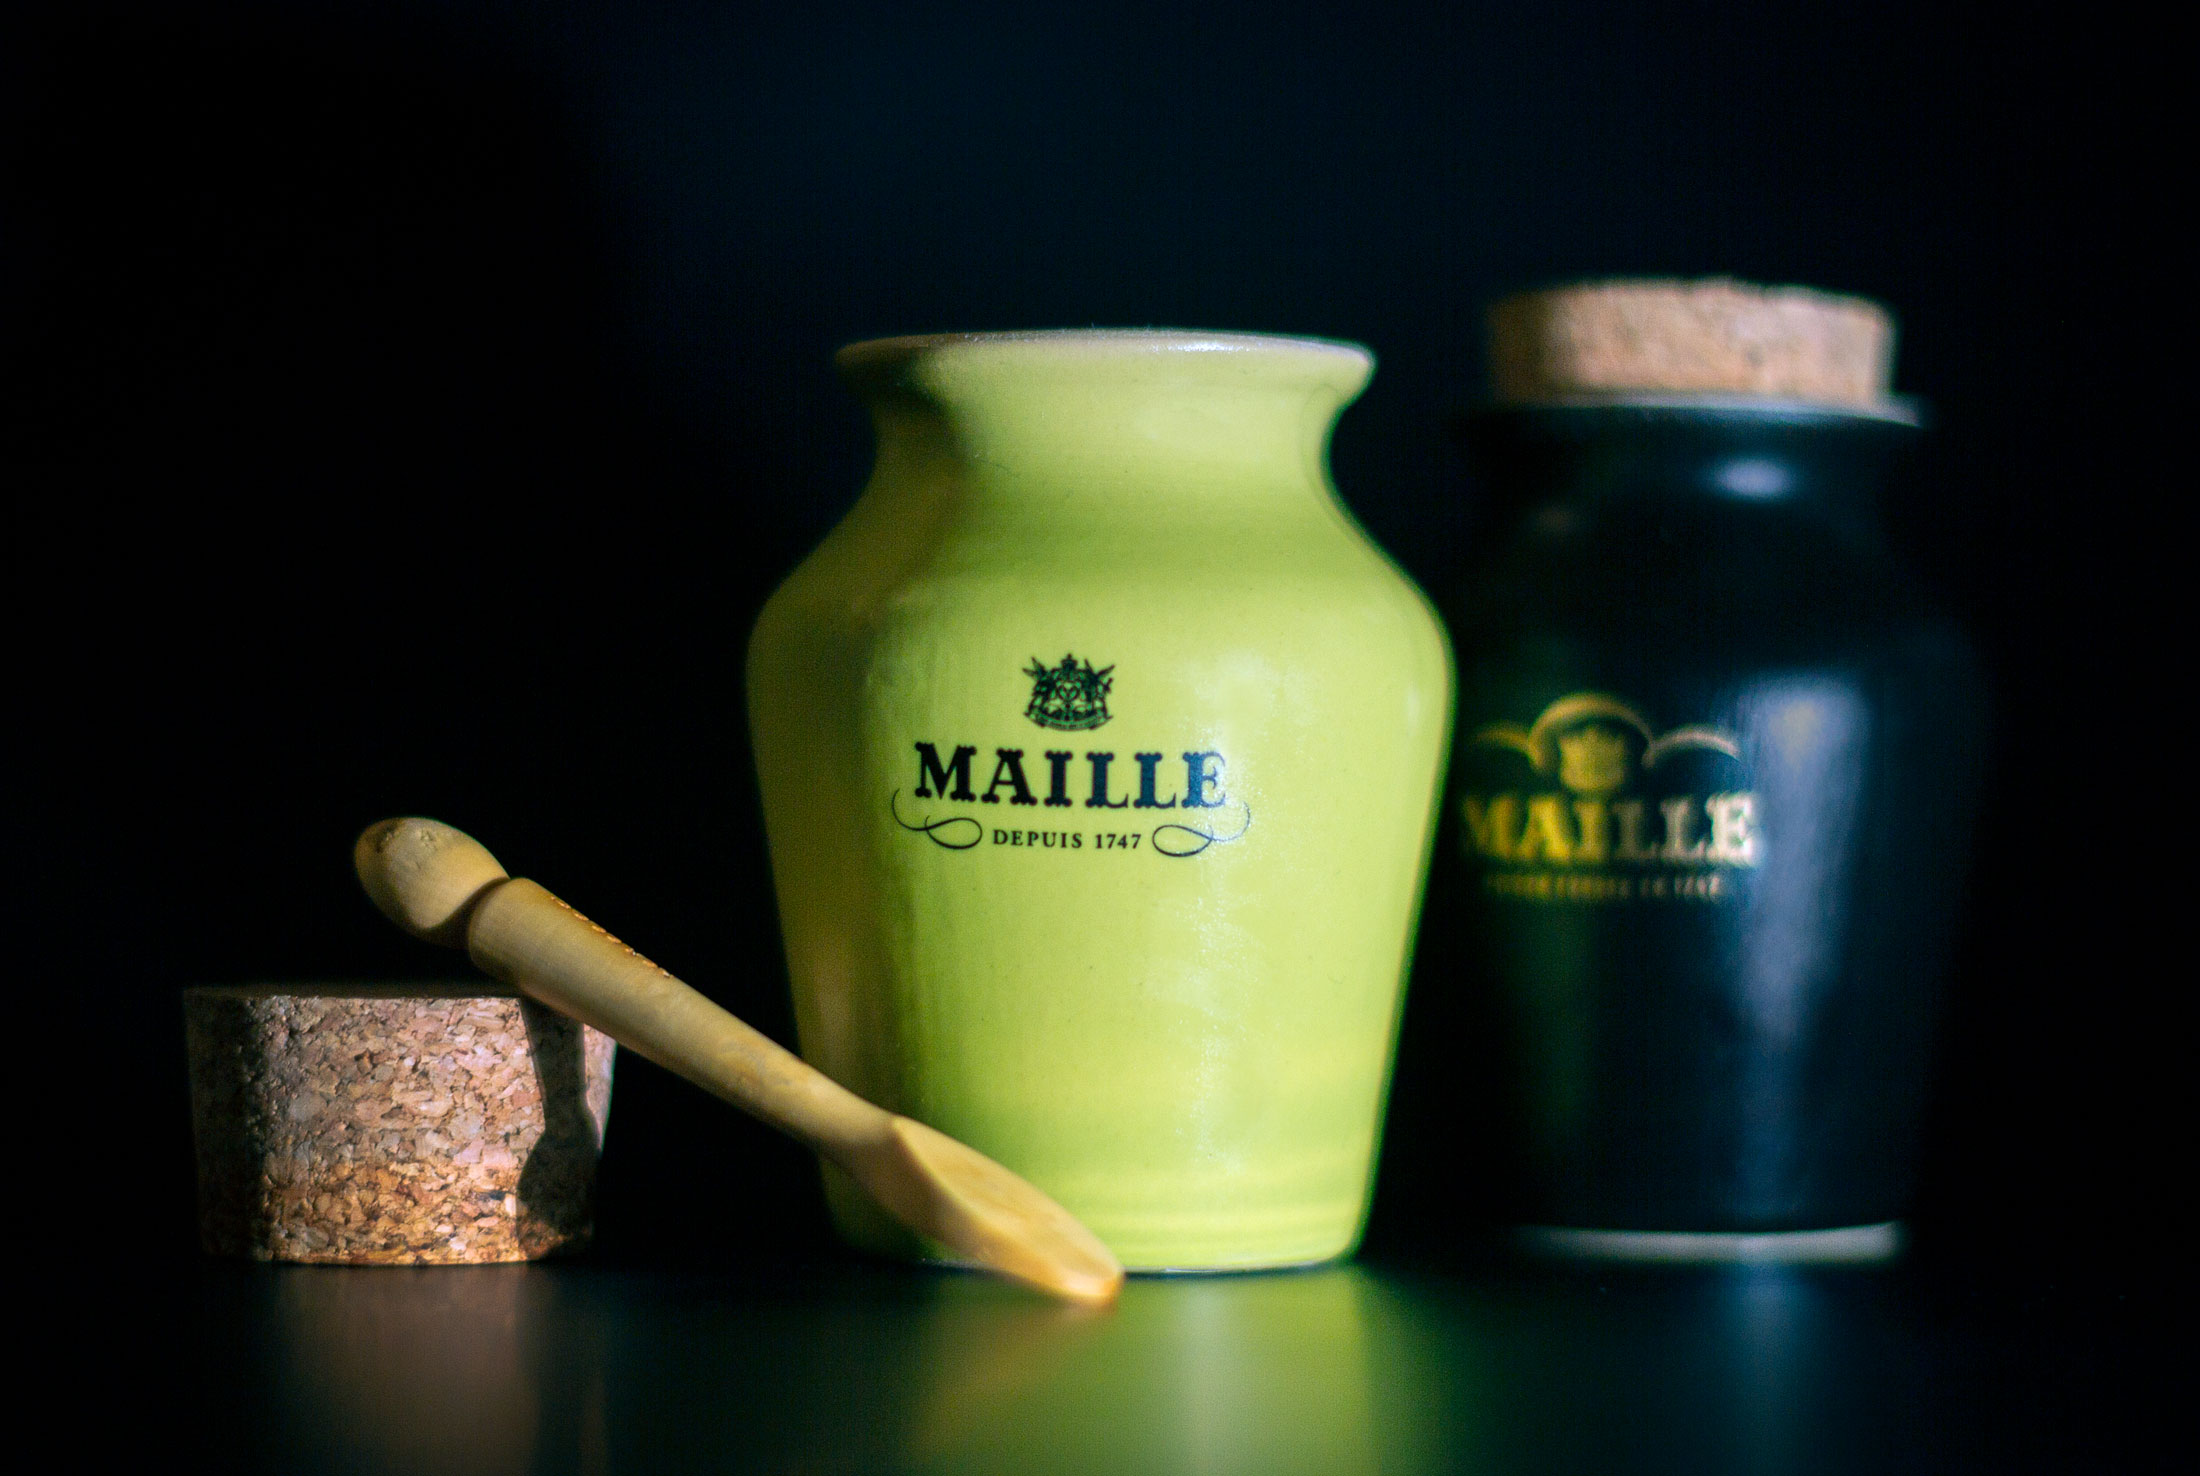 maille mustard, Dijon France